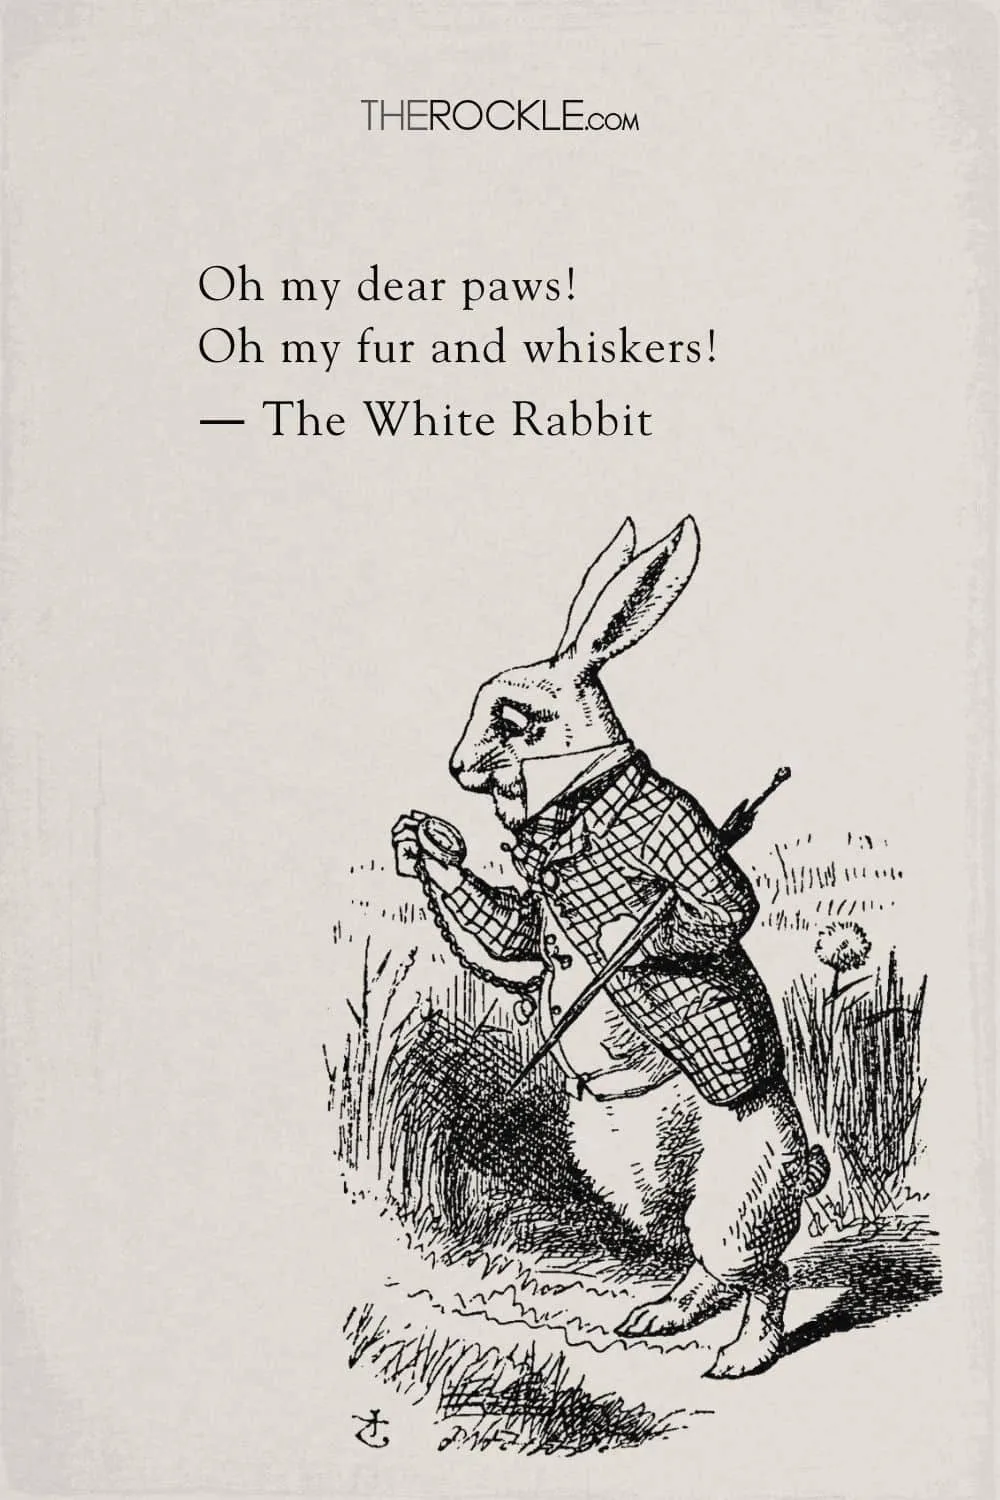 The White Rabbit quote